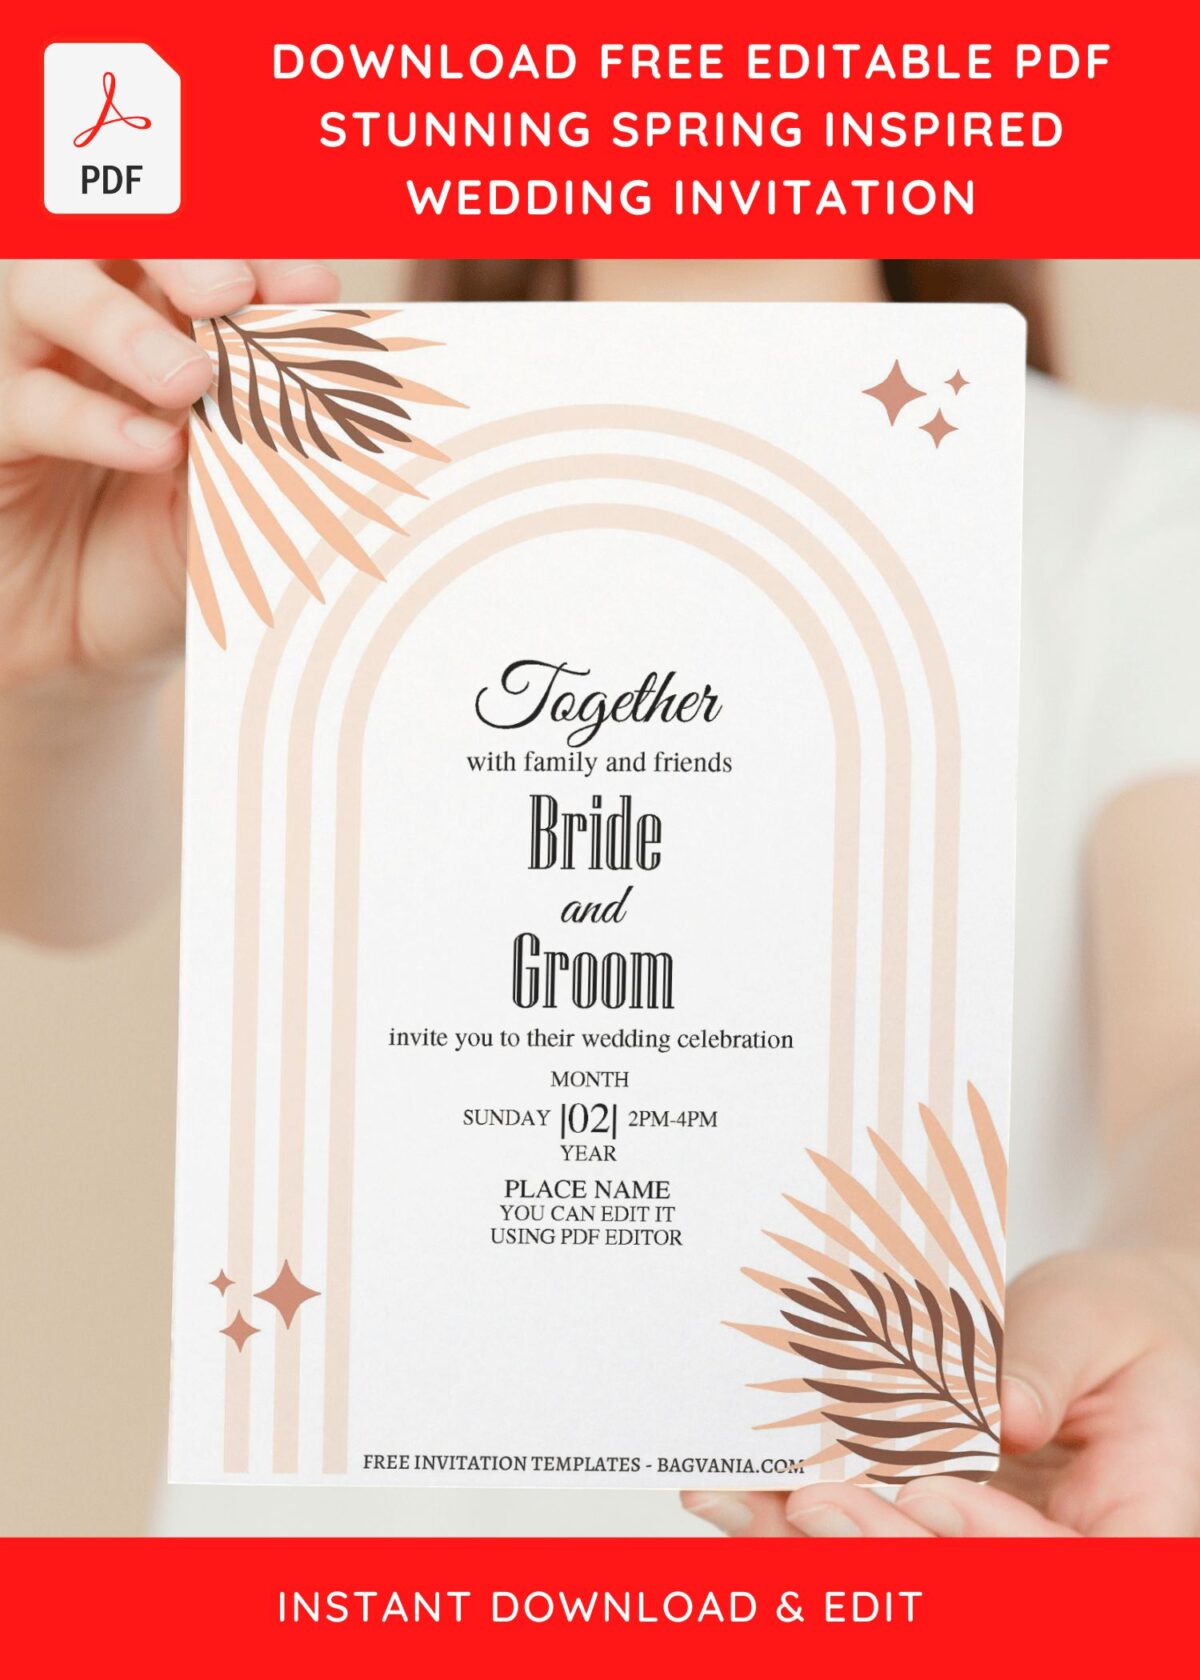 (Free Editable PDF) Boho Chic Wedding Invitation Templates with canvas background